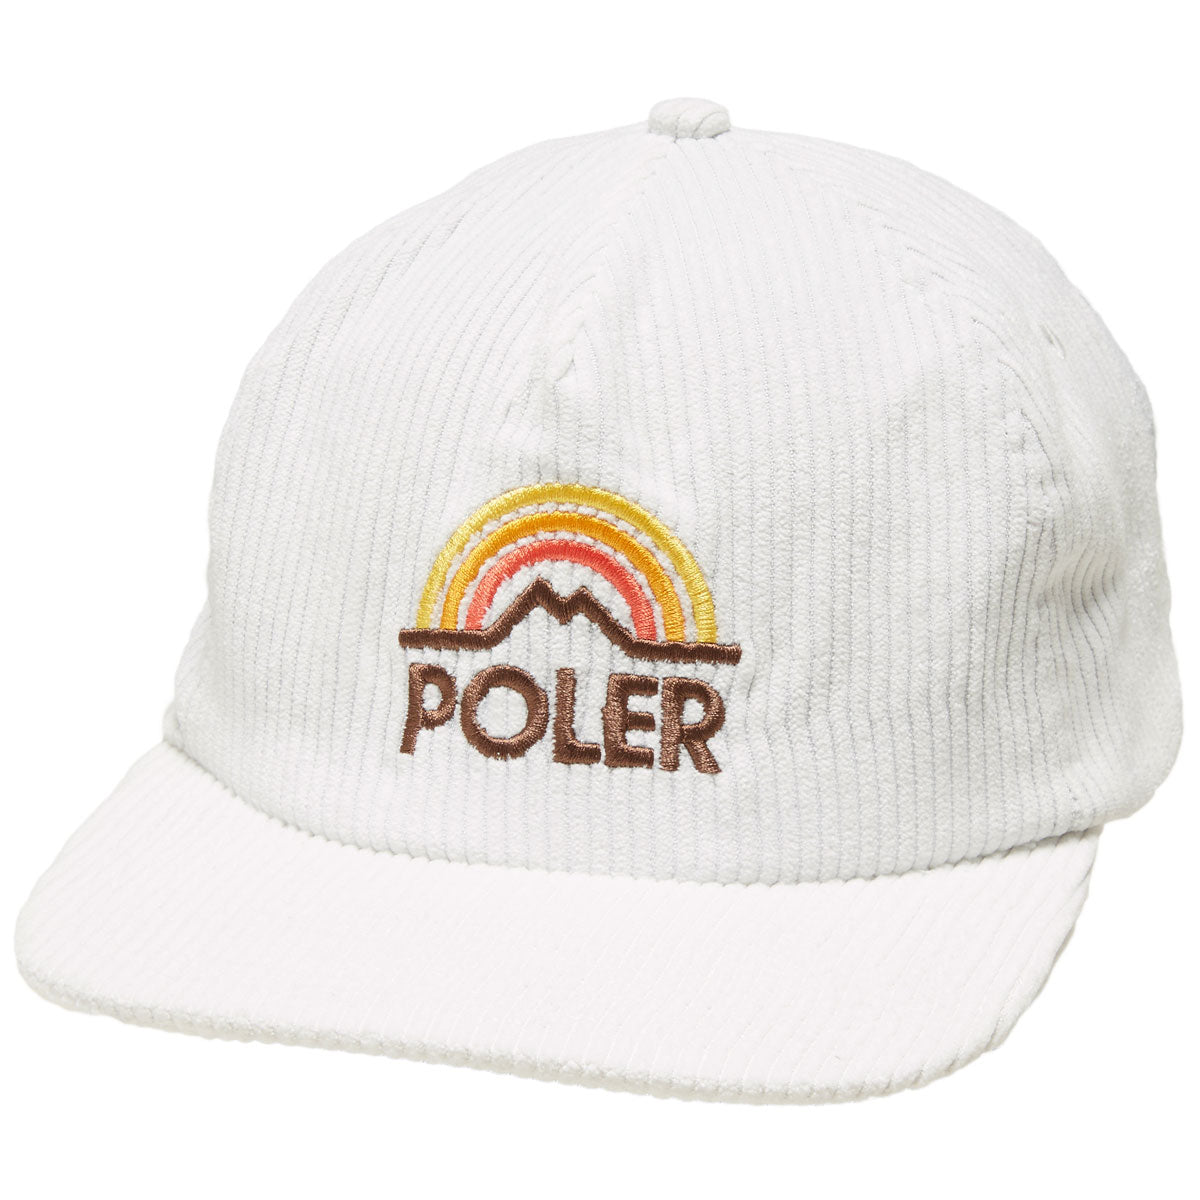 Poler Mtn Rainbow Hat - White image 1